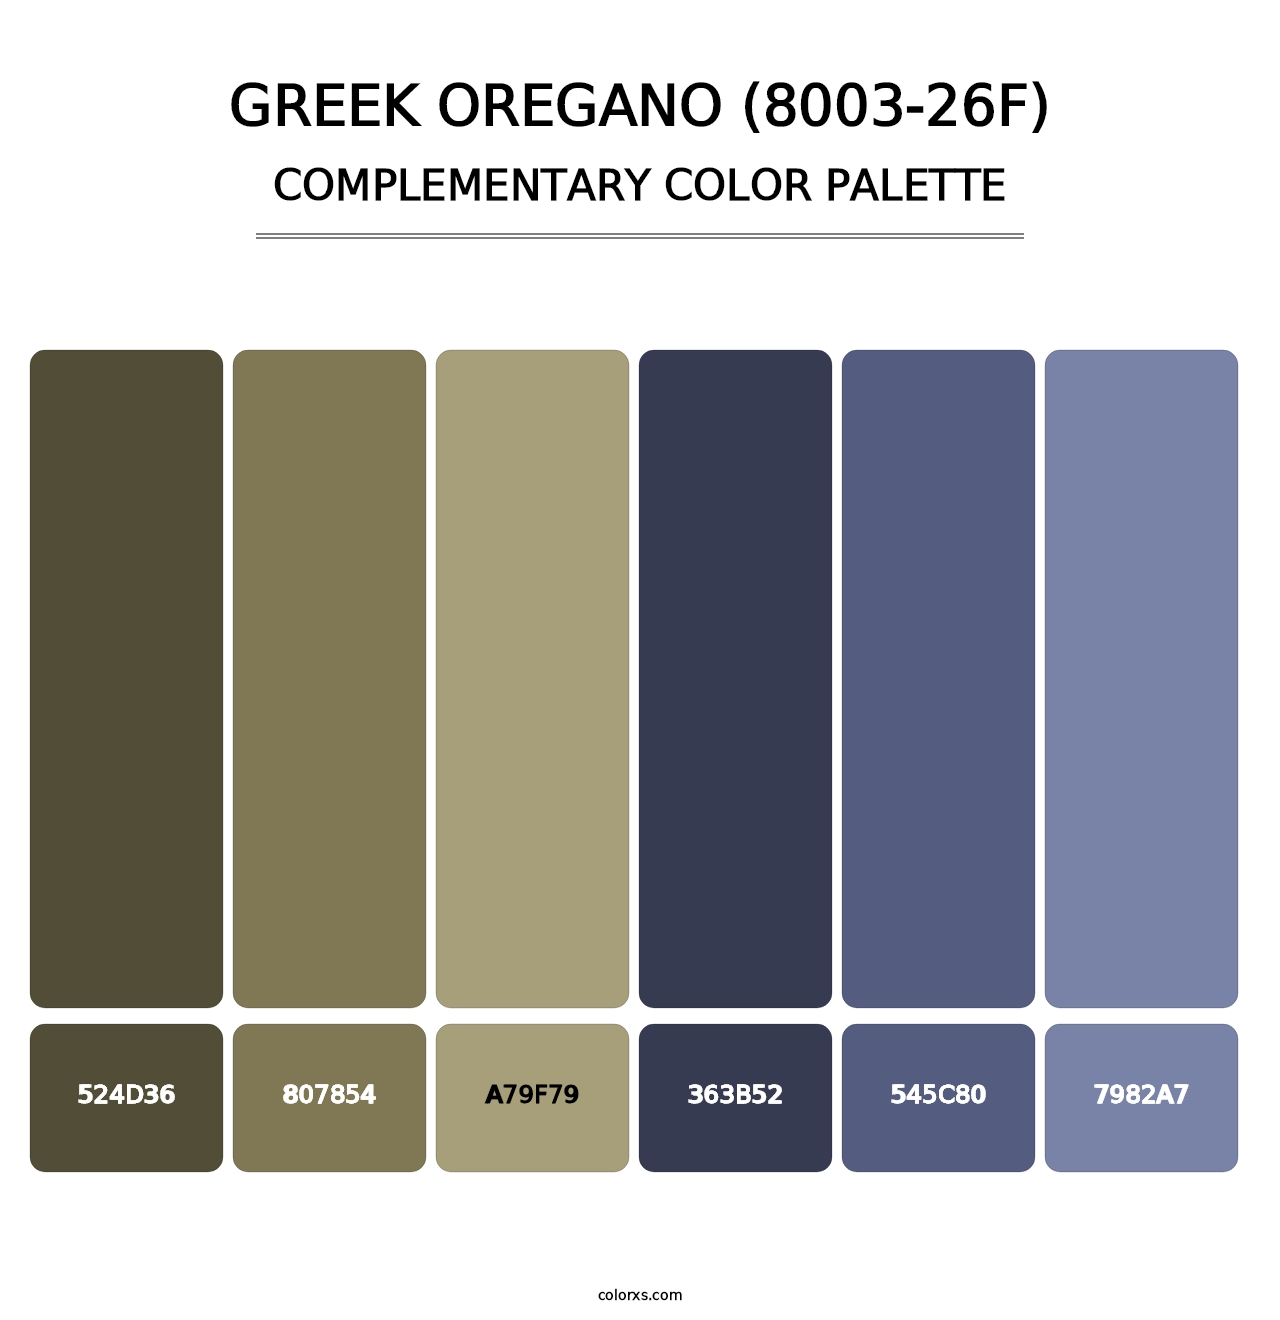 Greek Oregano (8003-26F) - Complementary Color Palette